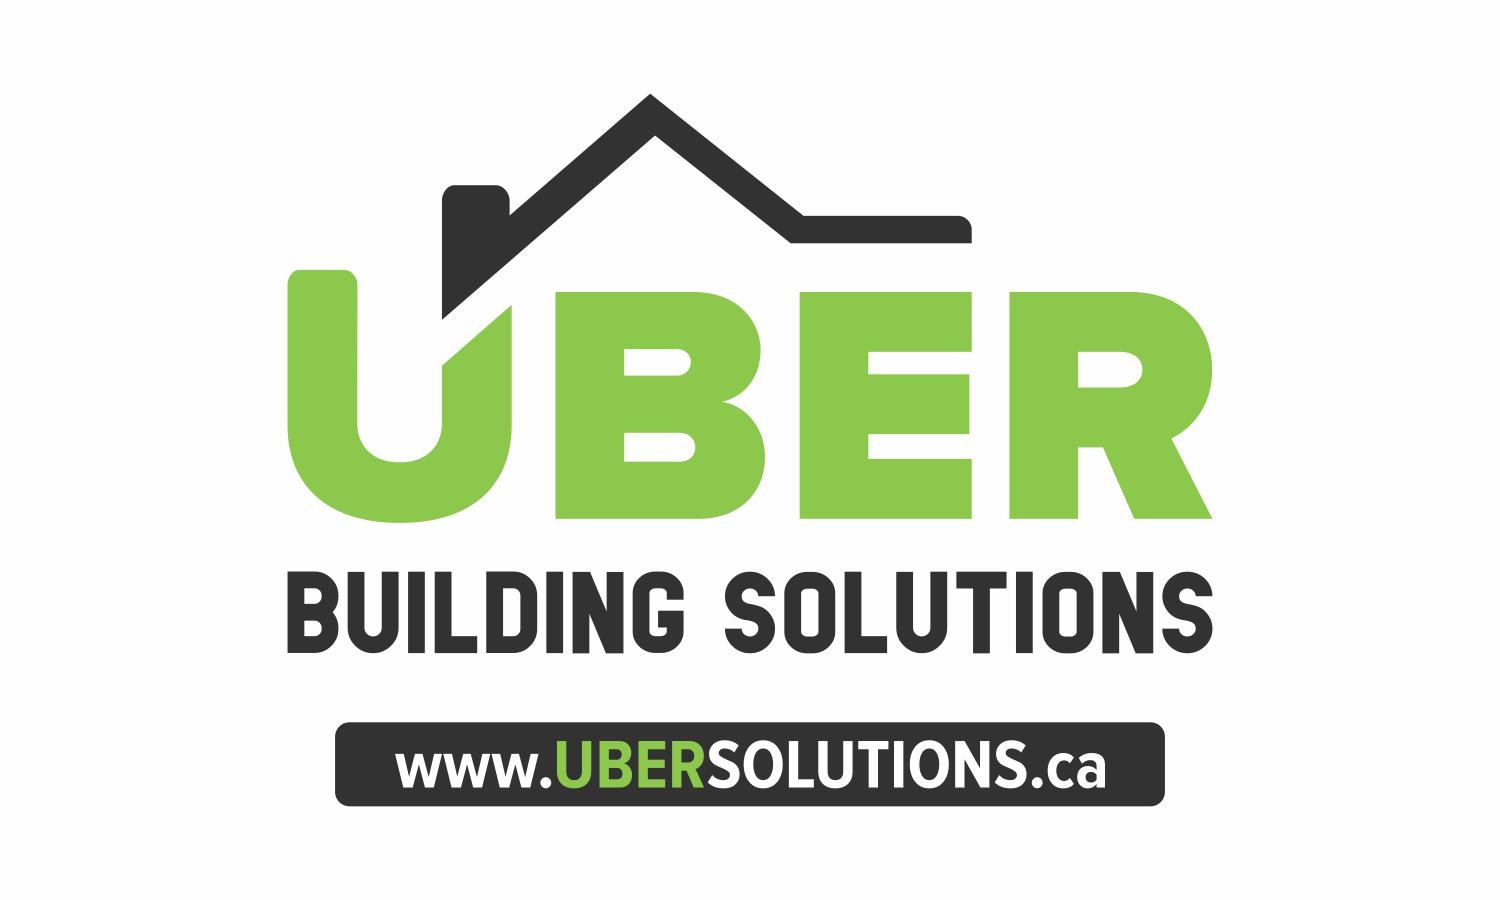 UBER building solutions Logo - www.ubersolutions.ca